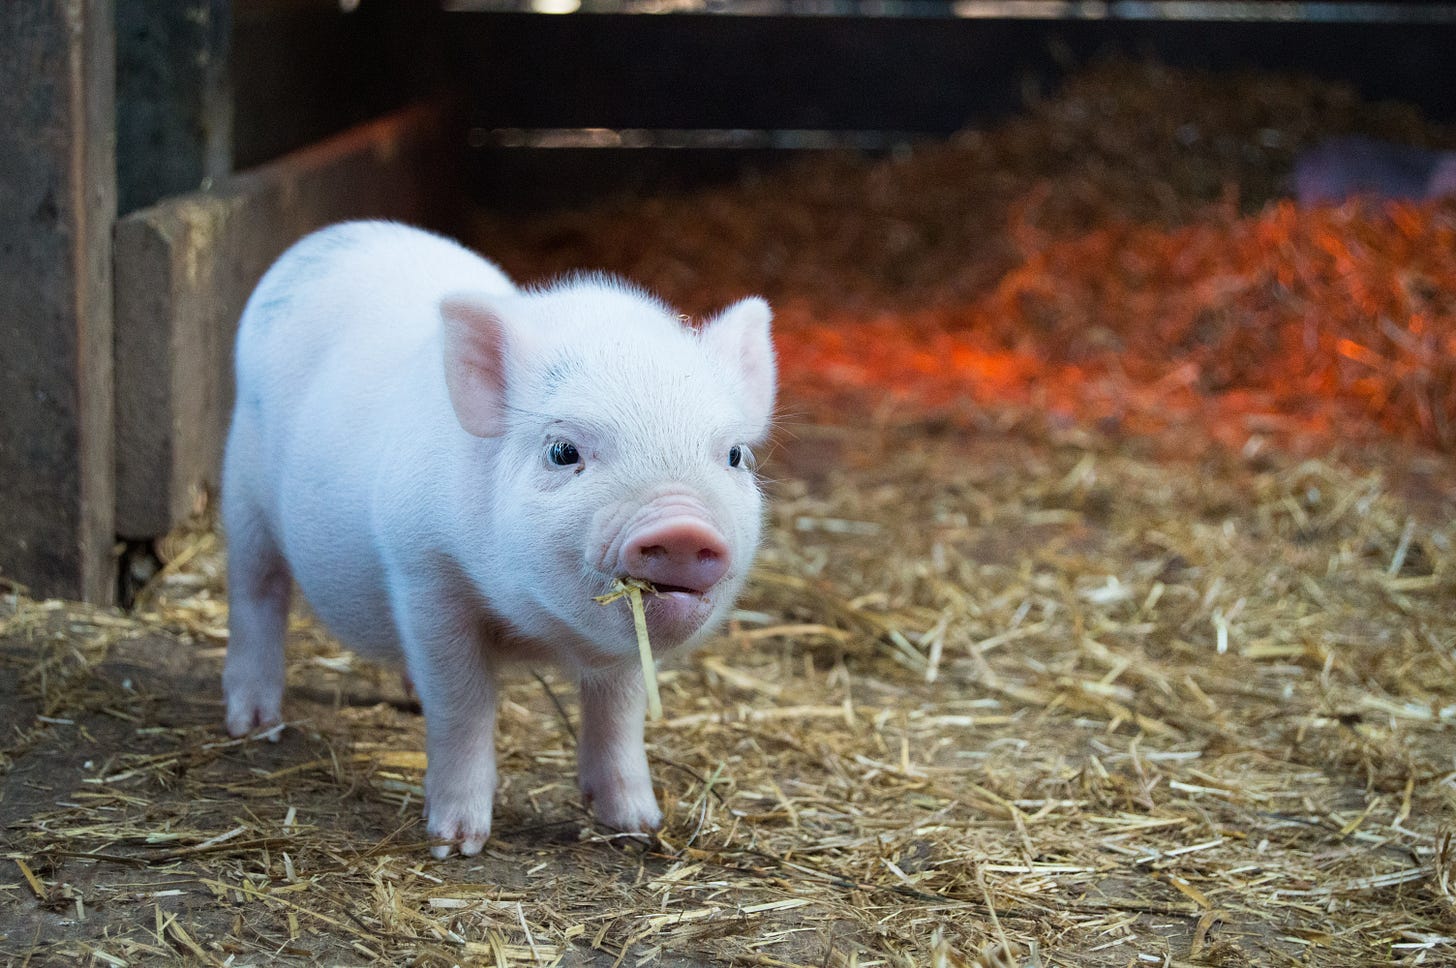 A piglet. Photo by Christopher Carson on Unsplash.